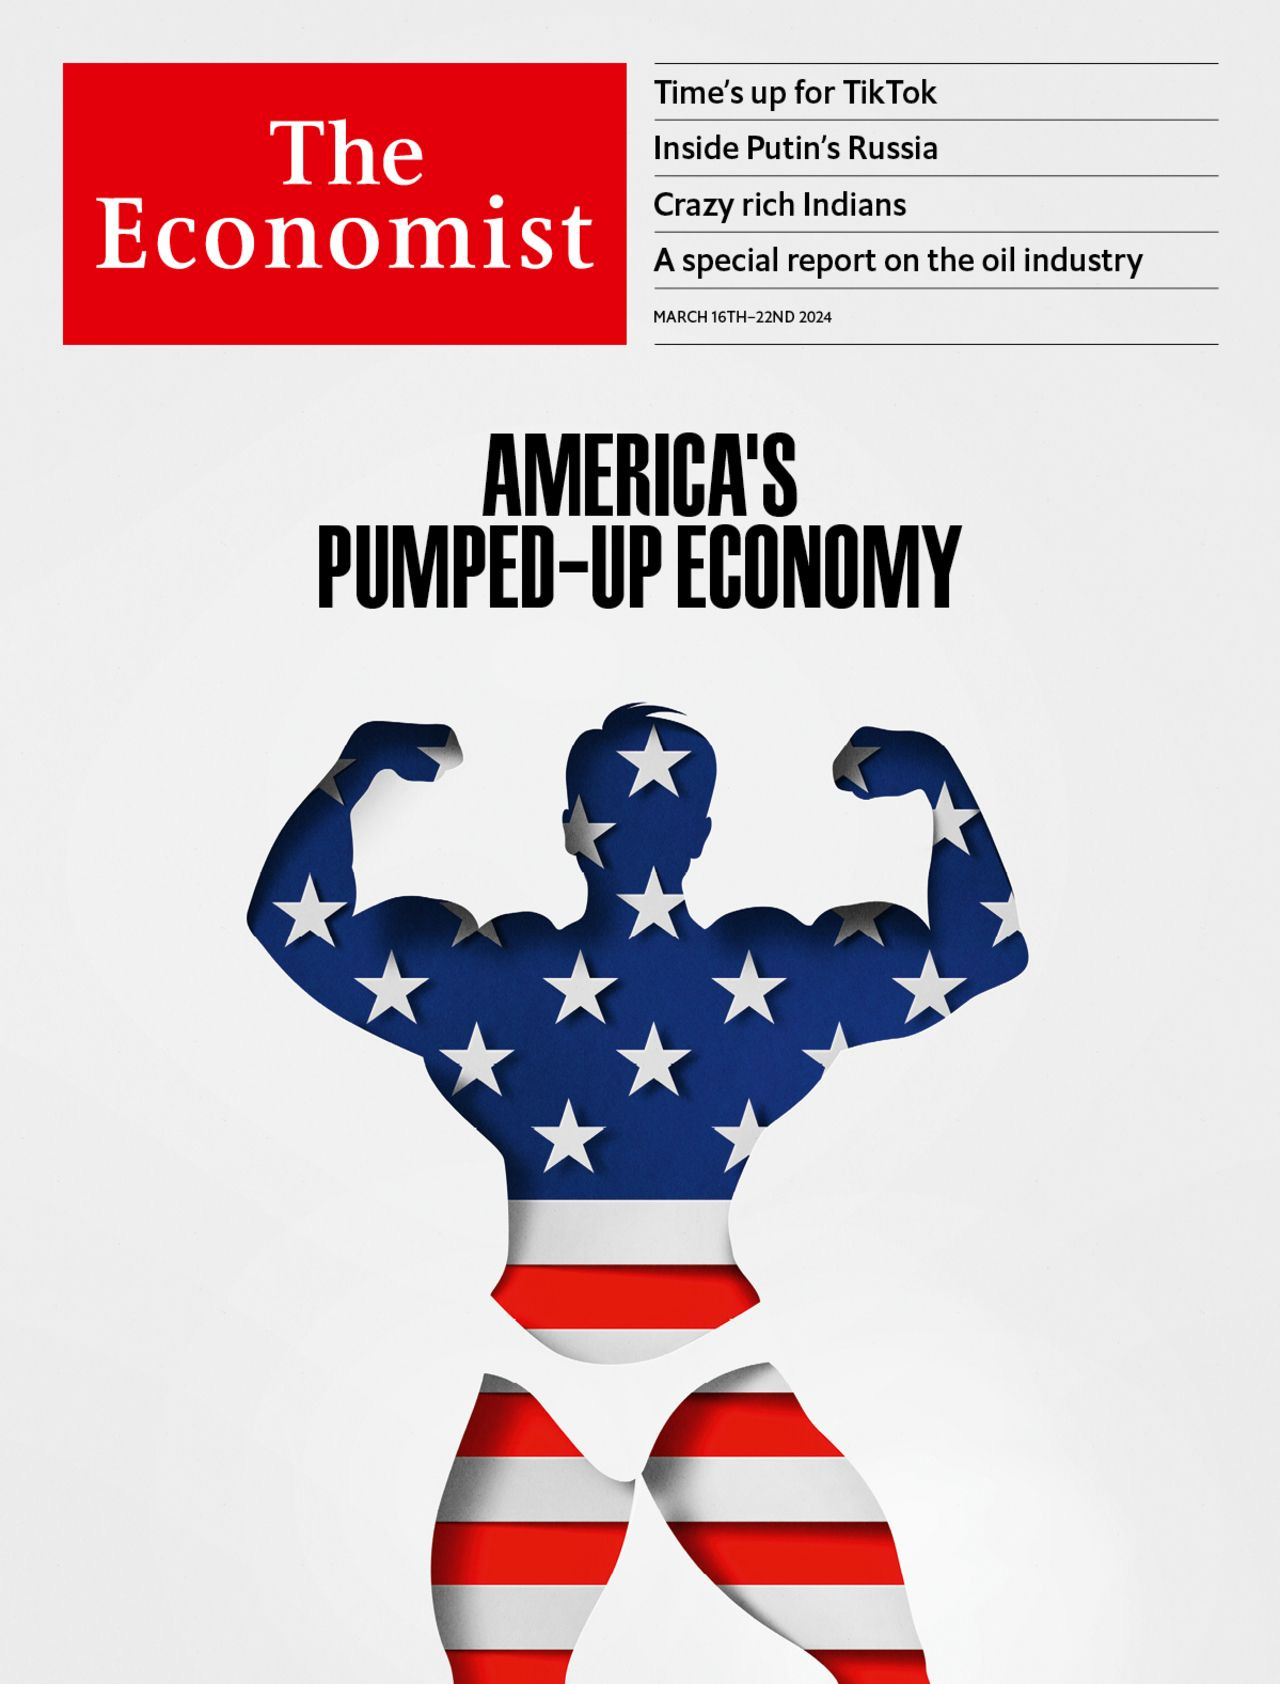 Americas’s pumped-up economy